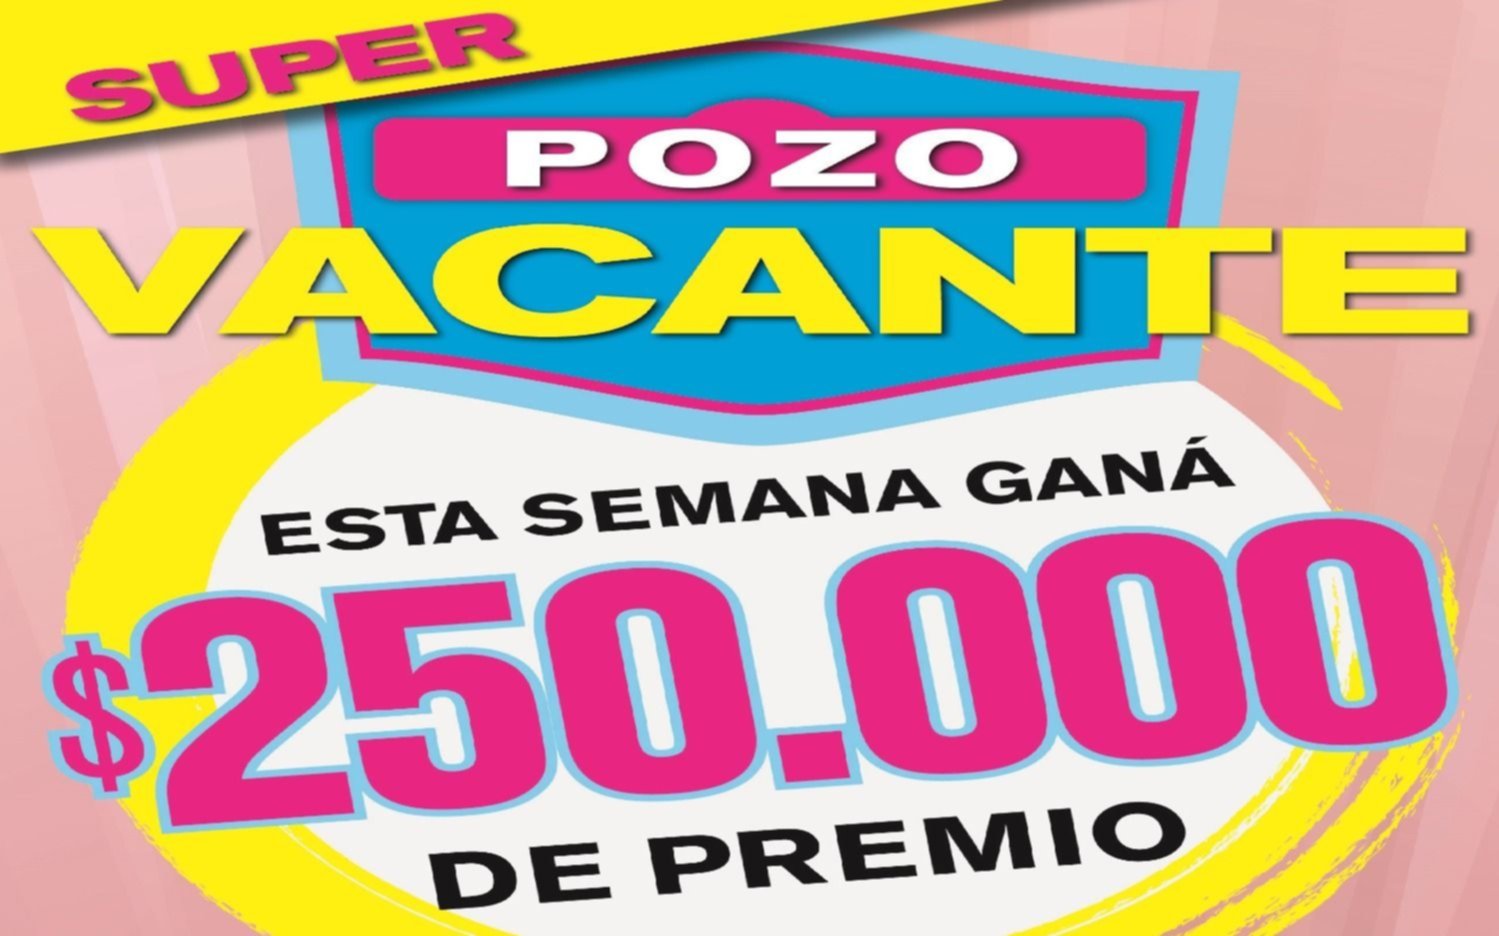 ¡Controlá El Cartonazo, podés ganarte un cuarto de millón de pesos con tu tarjeta!